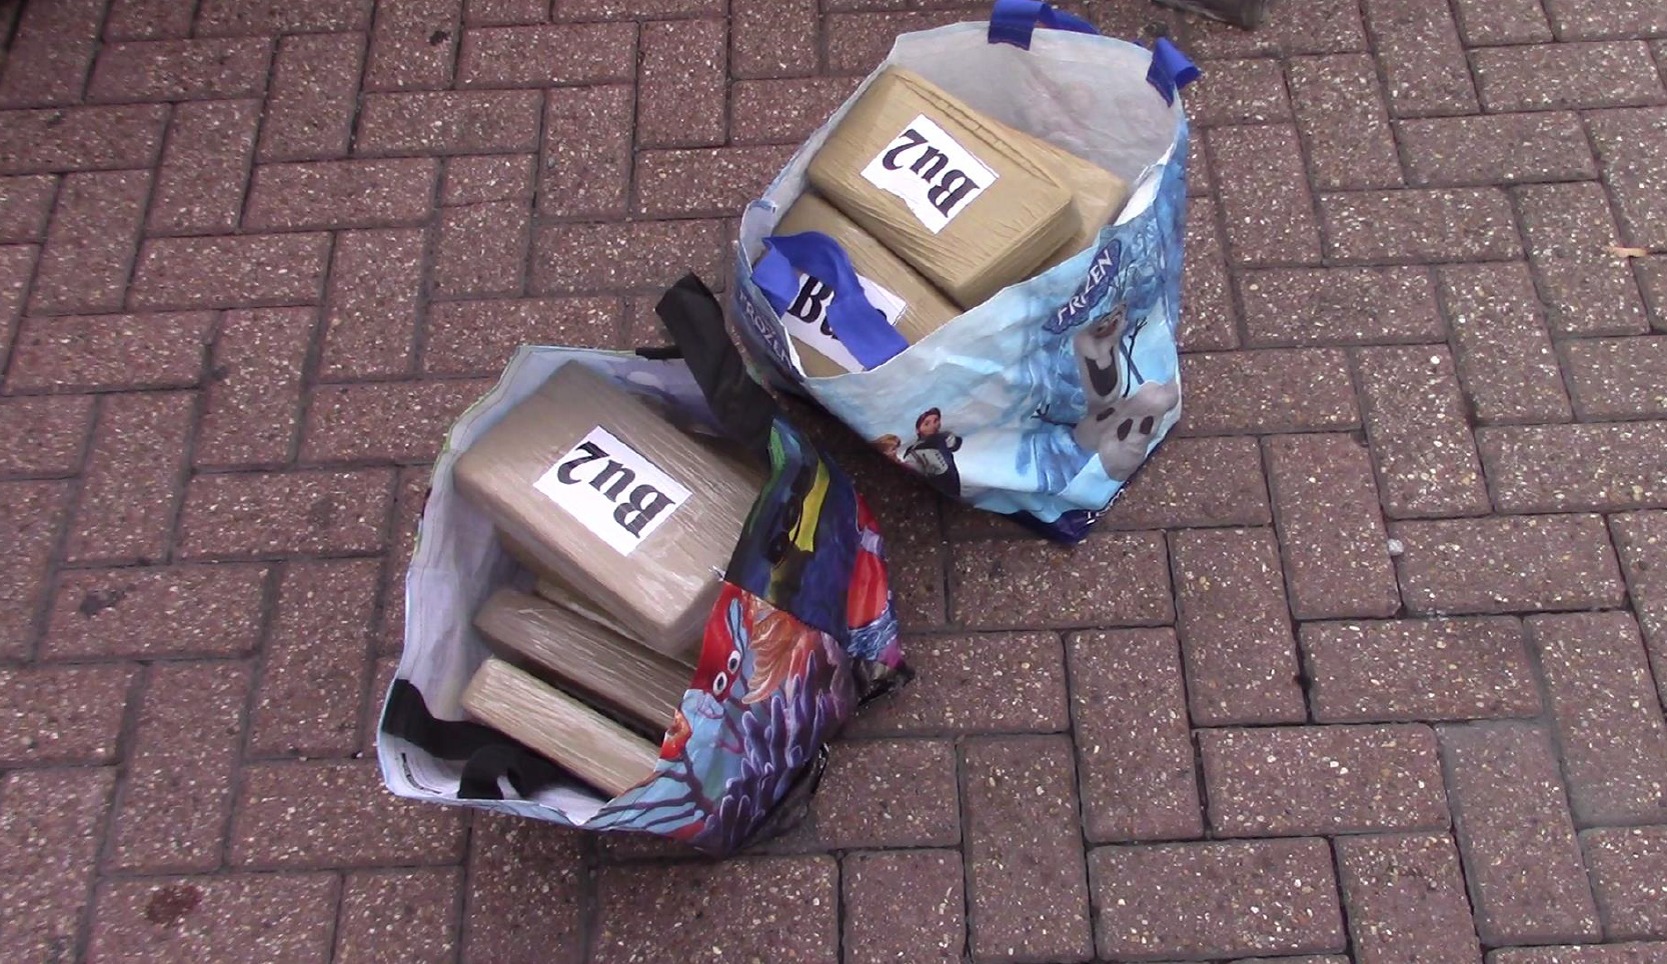 Essex drug dealer hid £1.6m of cocaine inside armchairs